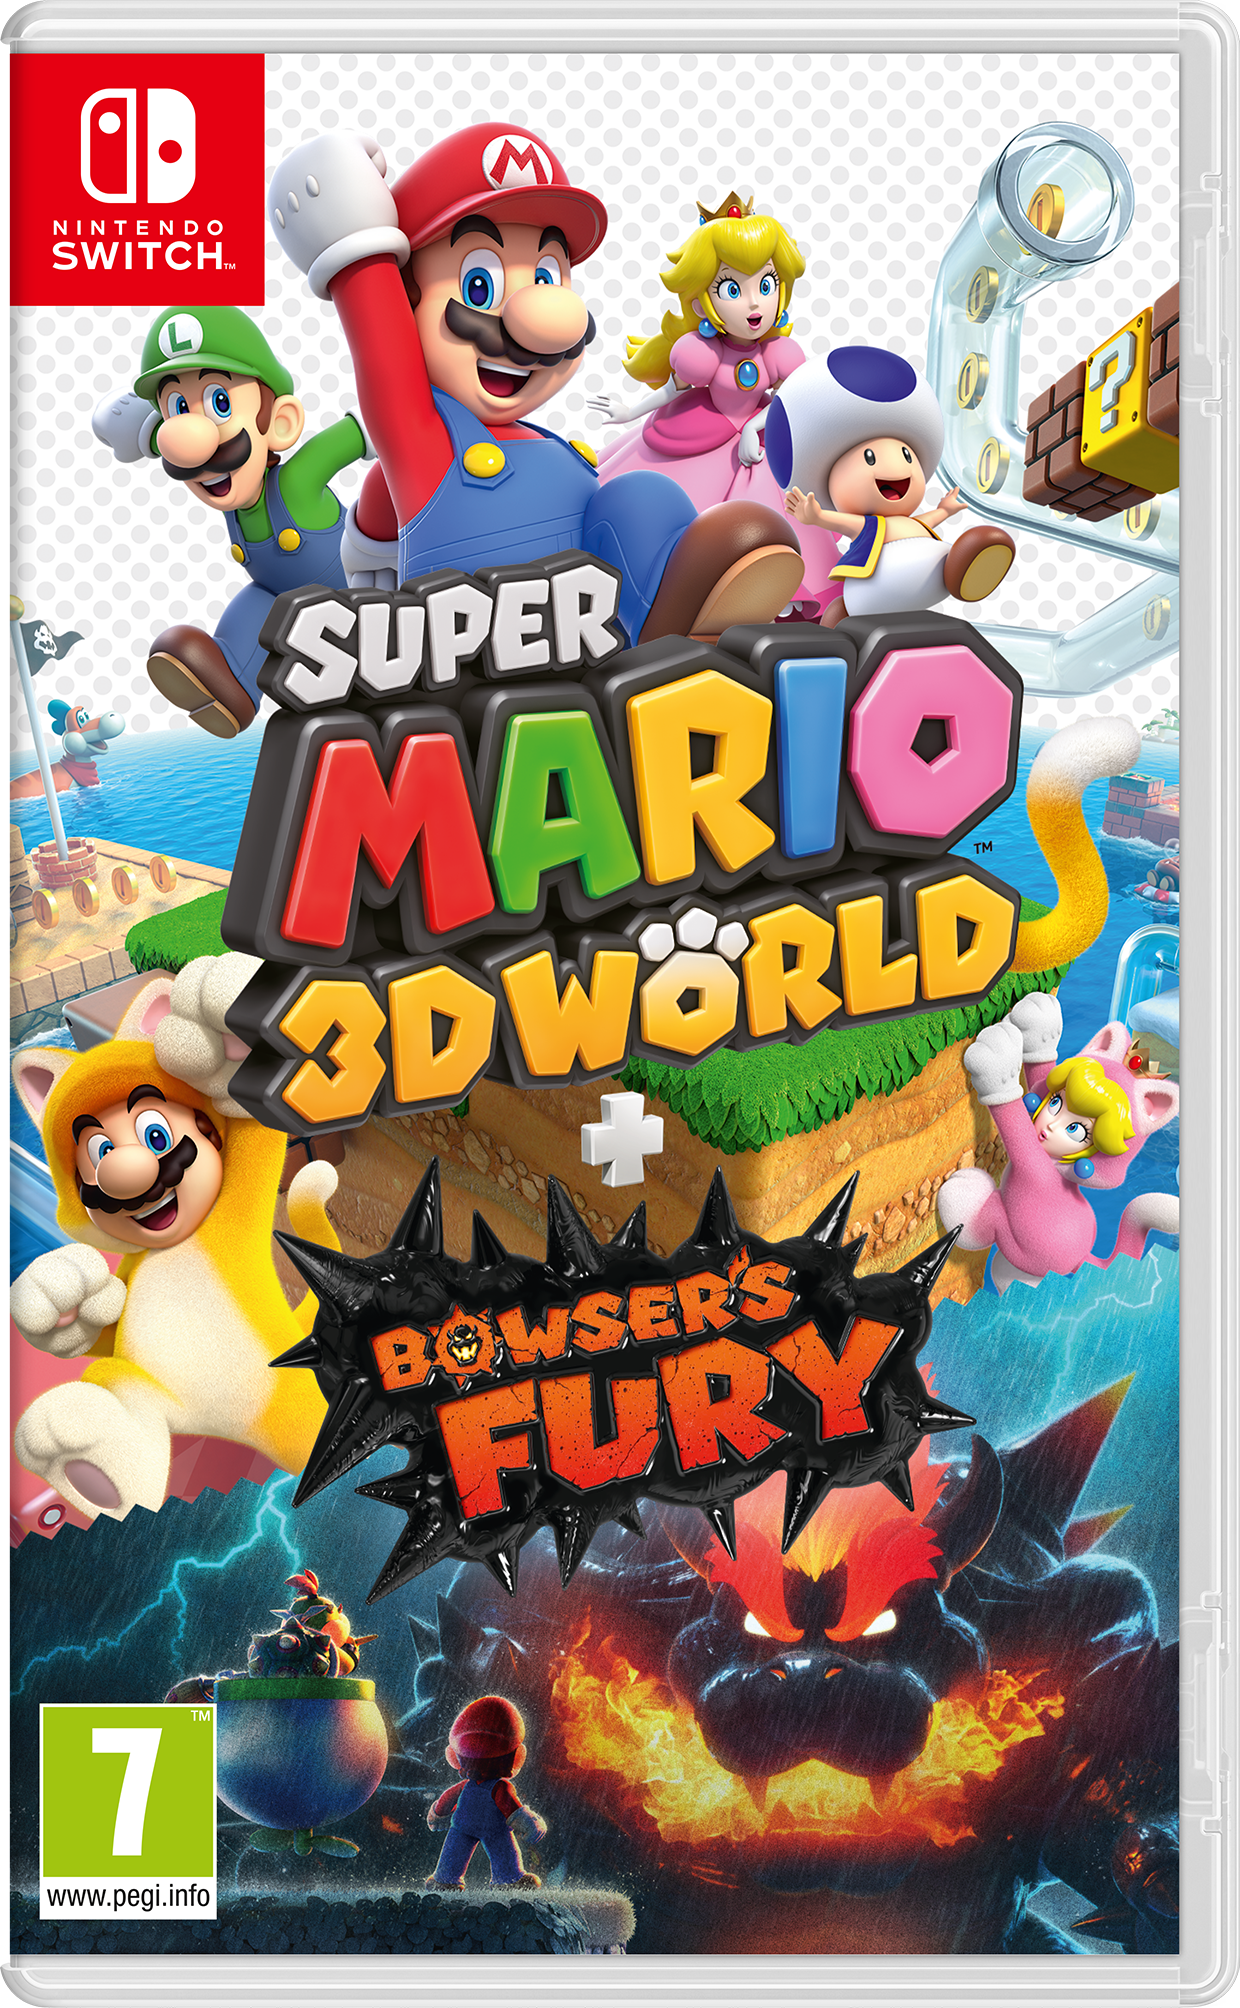 Super Mario 3D World + Bowser's Fury (UK, SE, DK, FI)